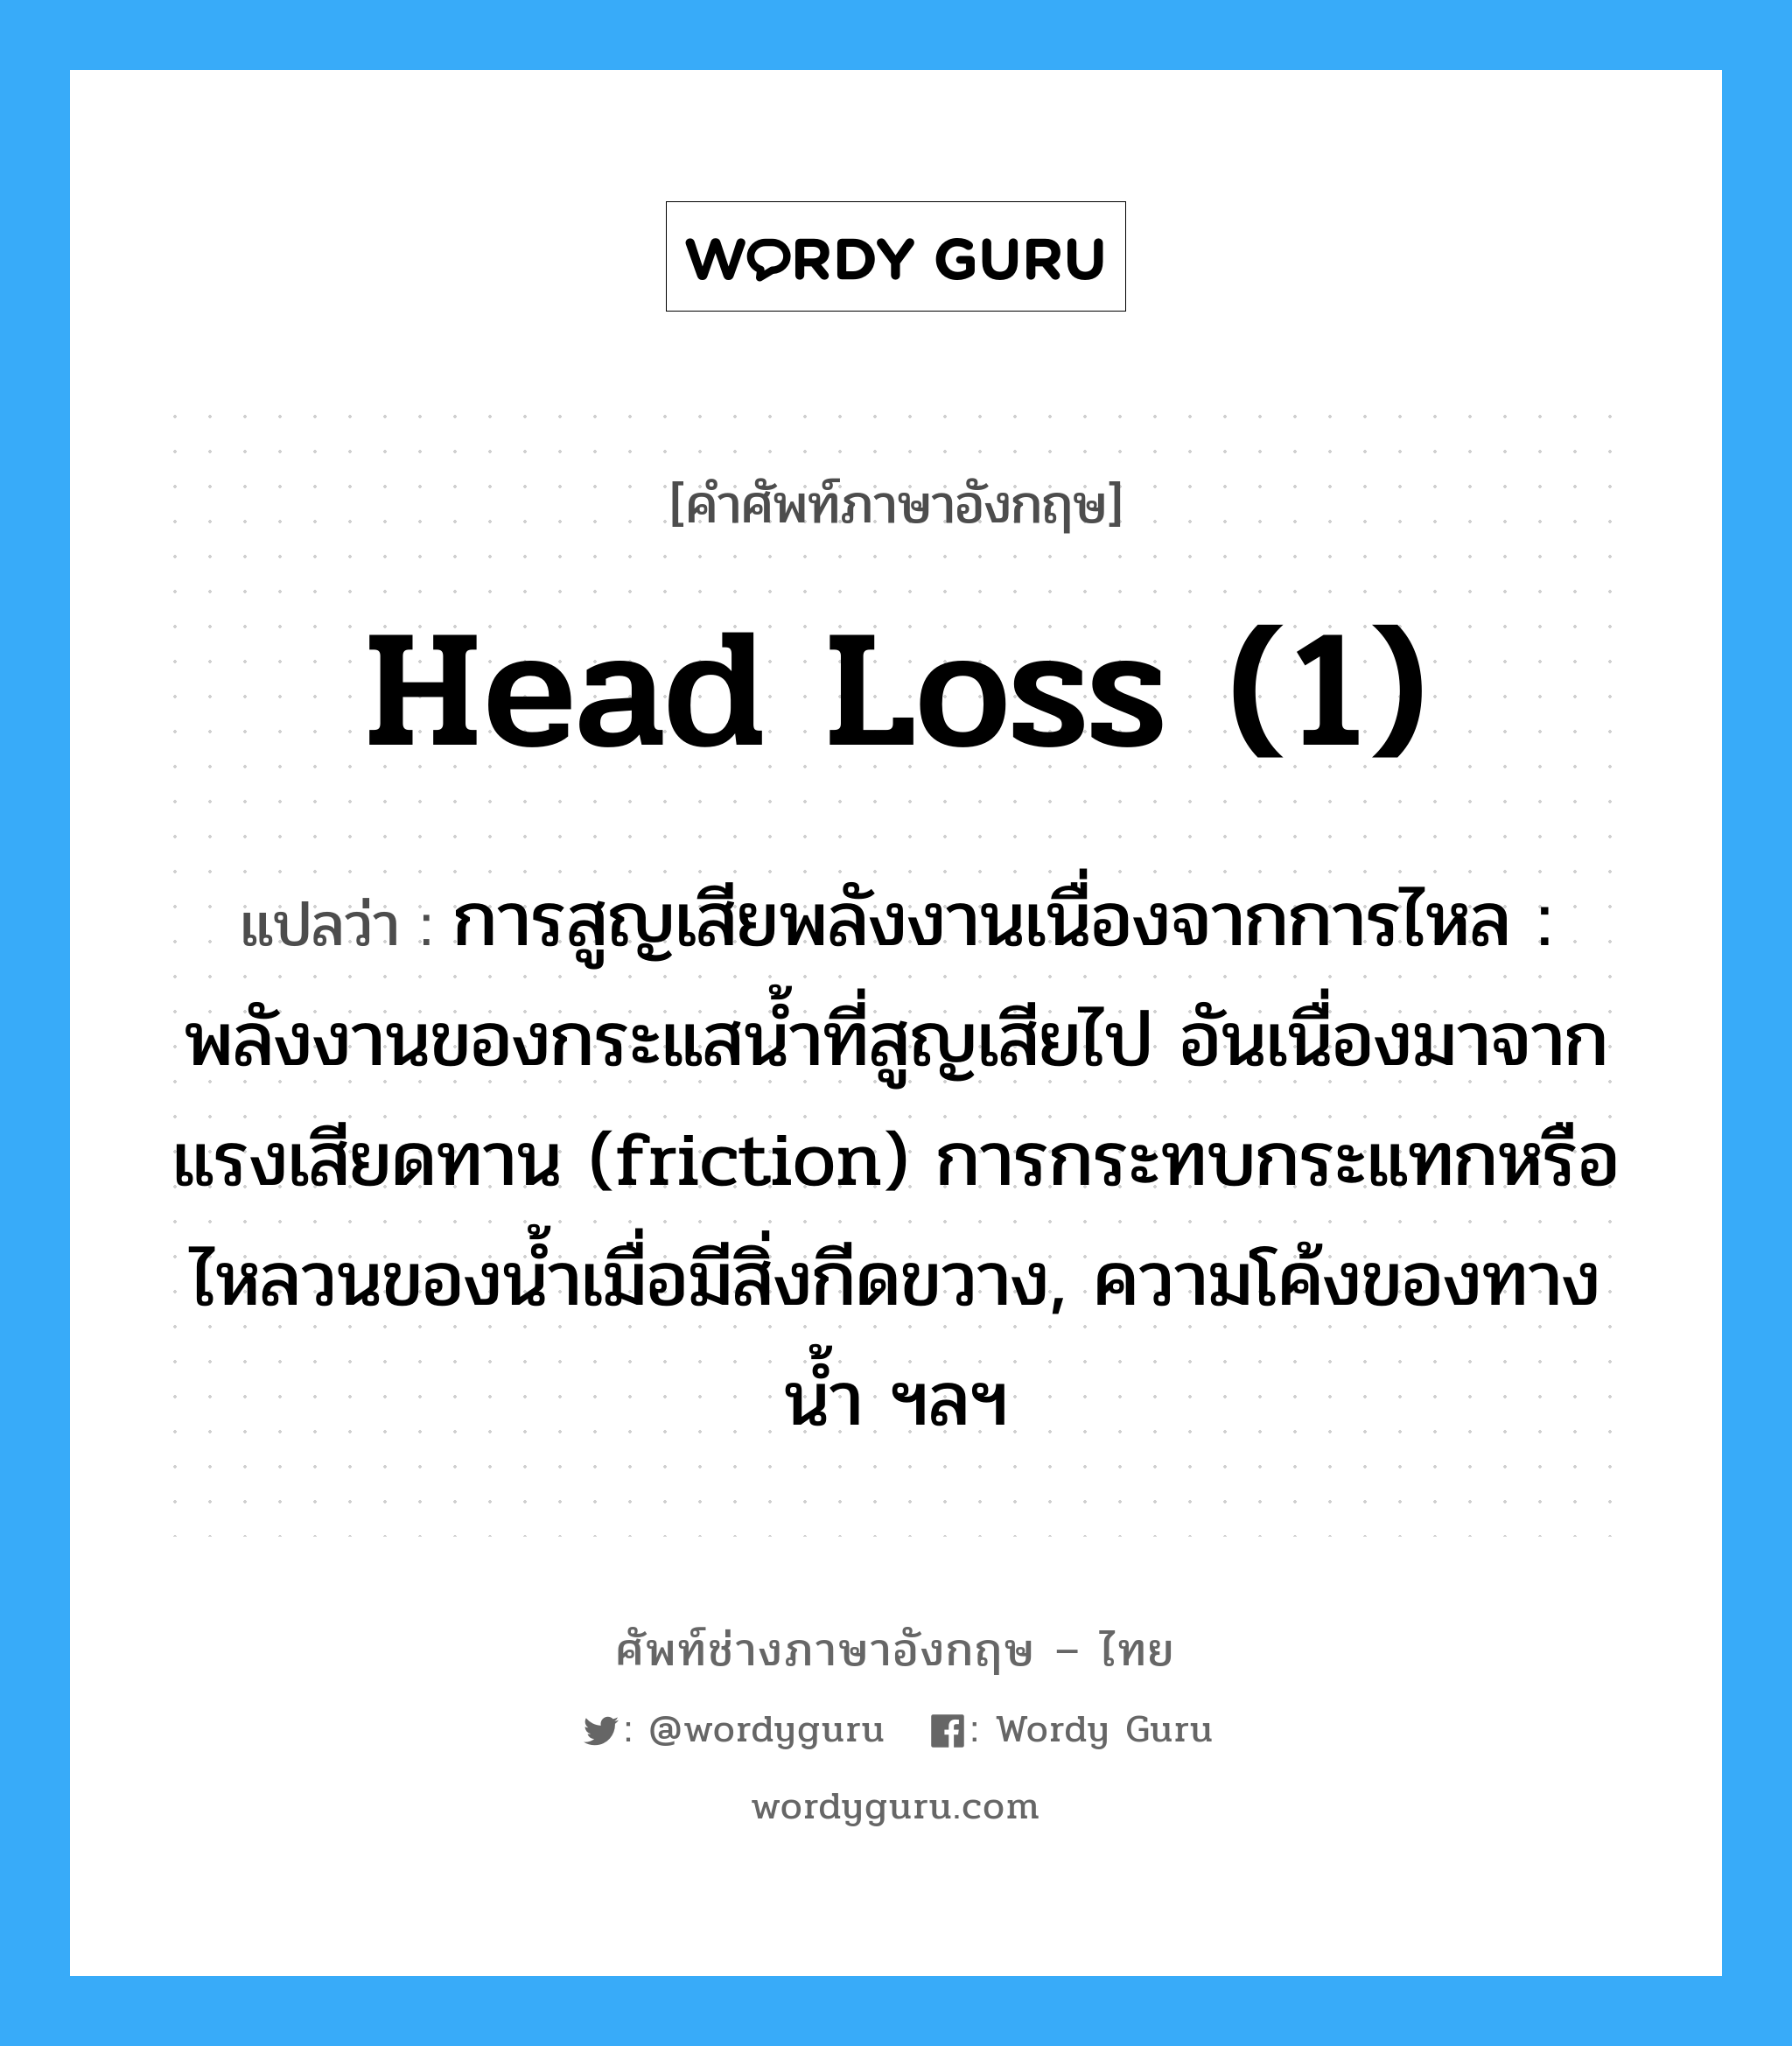 head loss (1) แปลว่า?, คำศัพท์ช่างภาษาอังกฤษ - ไทย head loss (1) คำศัพท์ภาษาอังกฤษ head loss (1) แปลว่า การสูญเสียพลังงานเนื่องจากการไหล : พลังงานของกระแสน้ำที่สูญเสียไป อันเนื่องมาจากแรงเสียดทาน (friction) การกระทบกระแทกหรือไหลวนของน้ำเมื่อมีสิ่งกีดขวาง, ความโค้งของทางน้ำ ฯลฯ